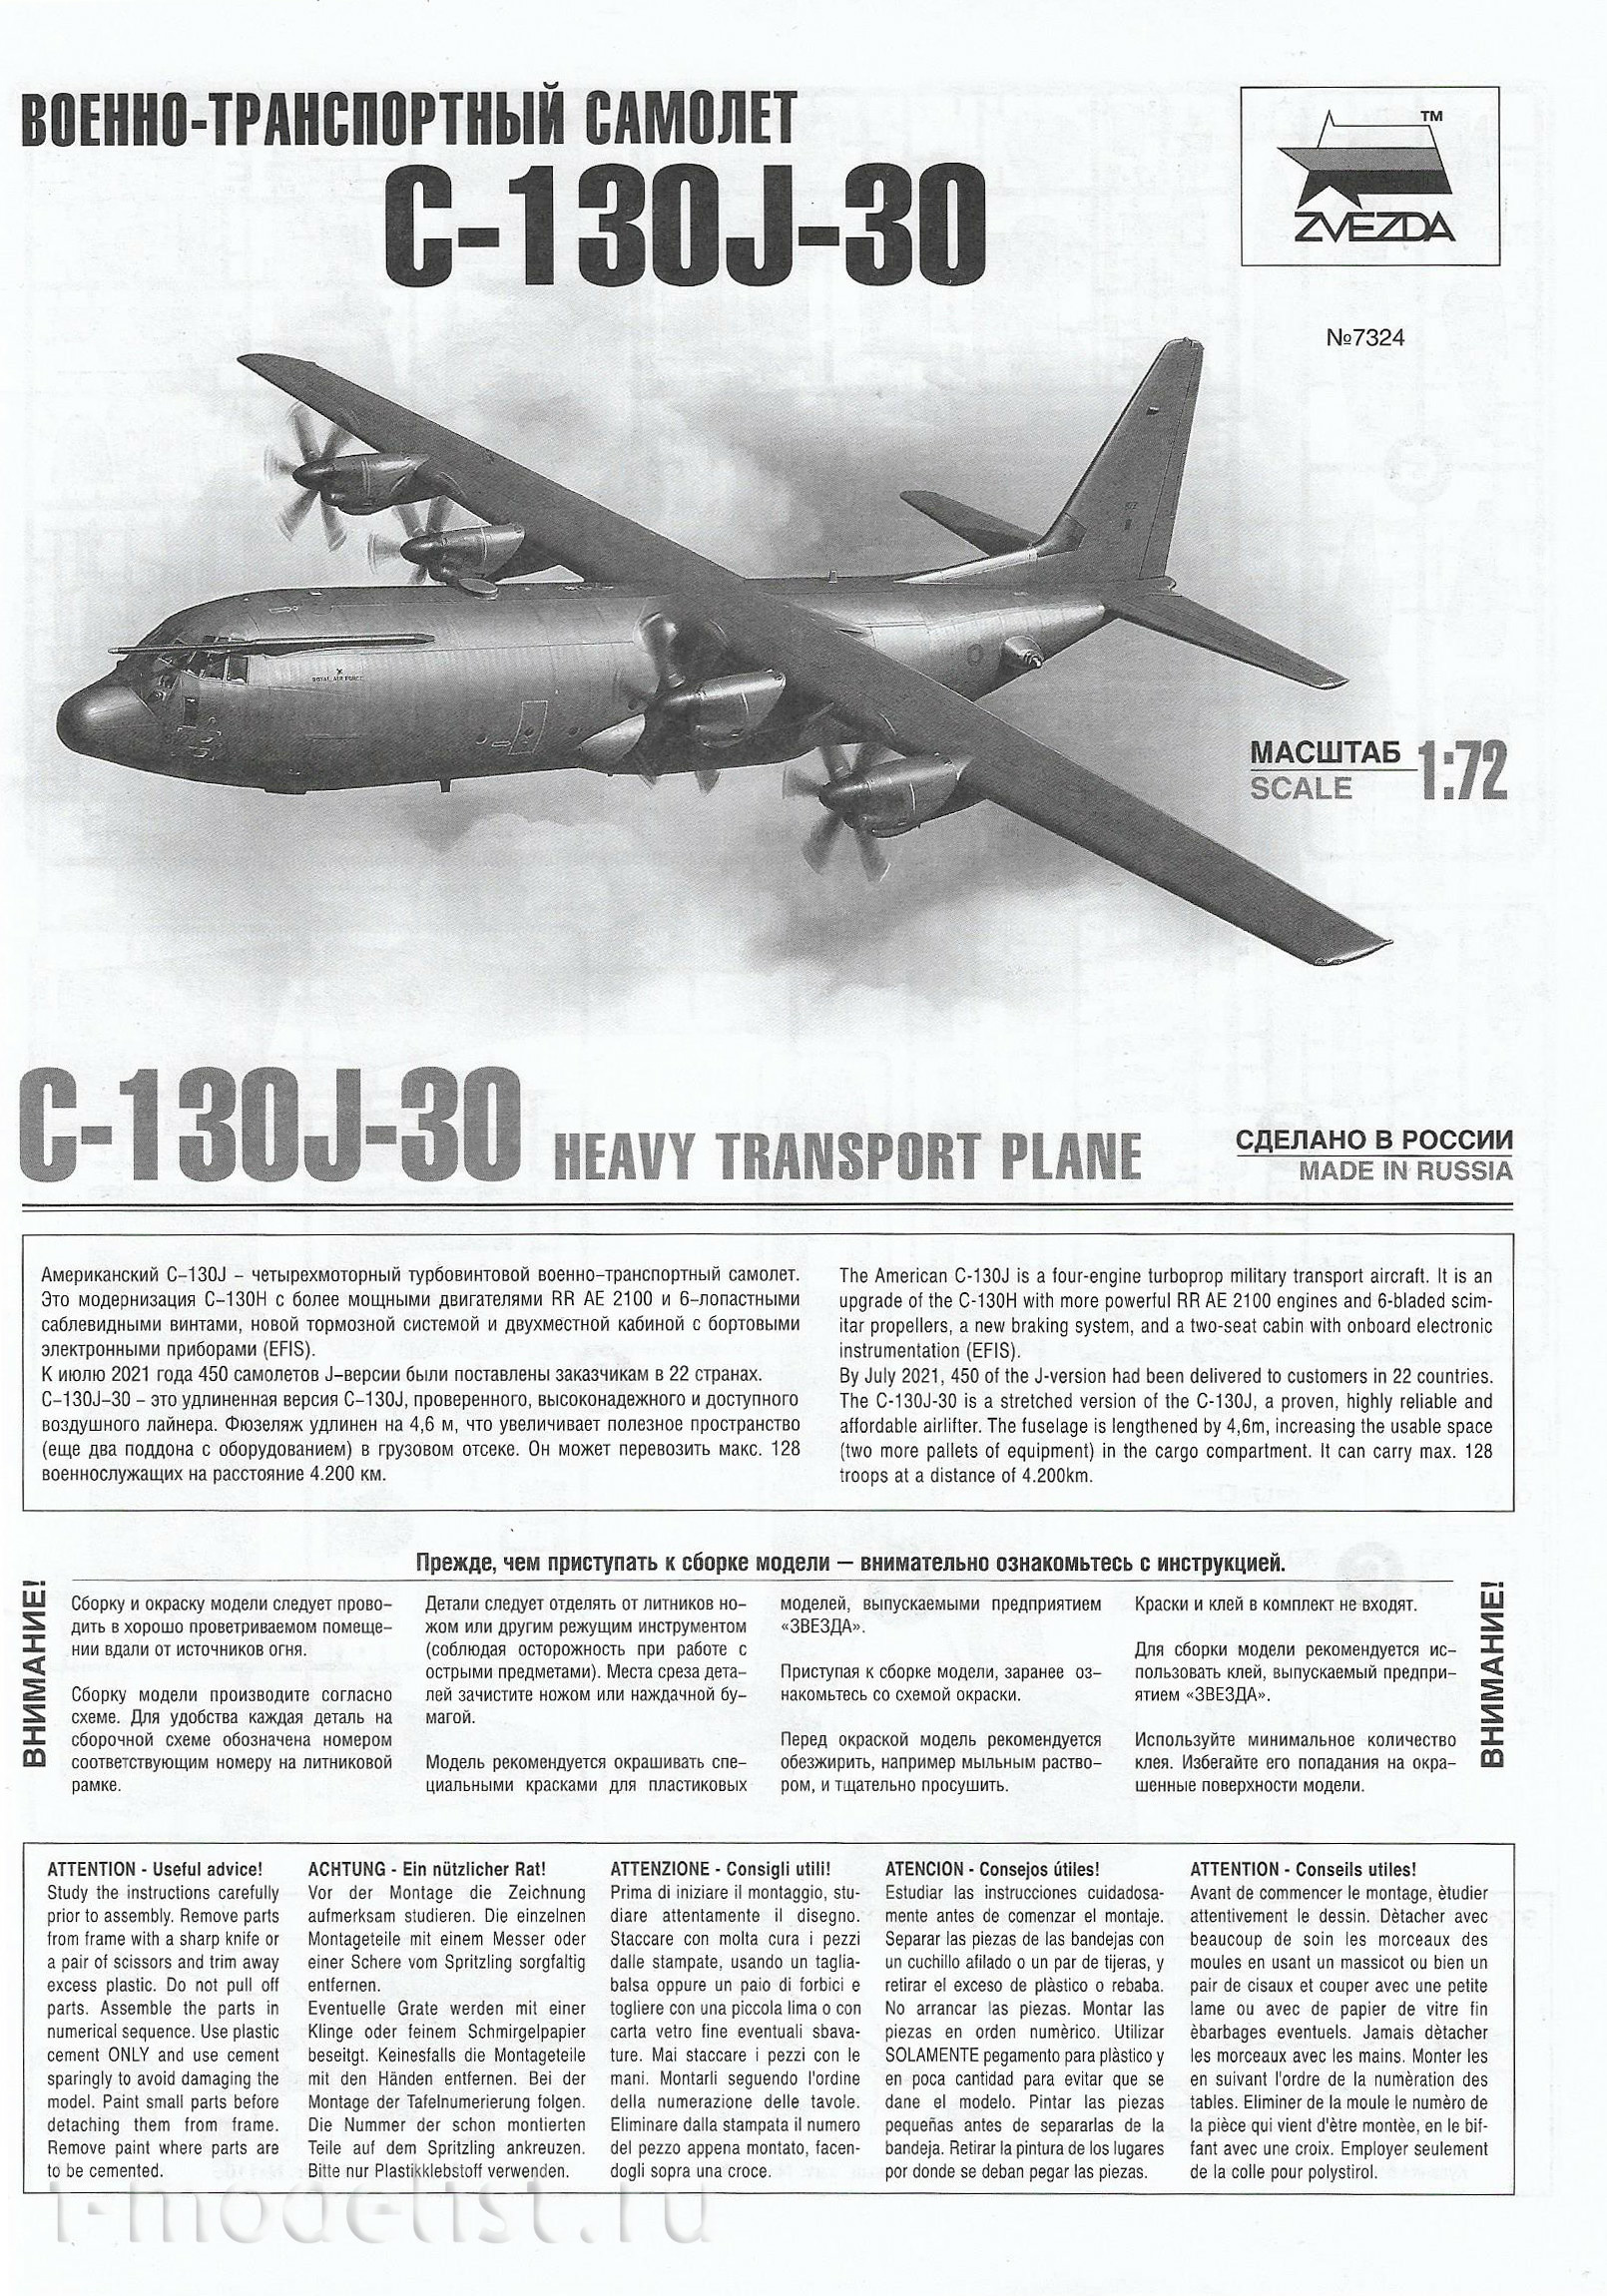 7324 Zvezda 1/72 American military transport aircraft C-130J-30